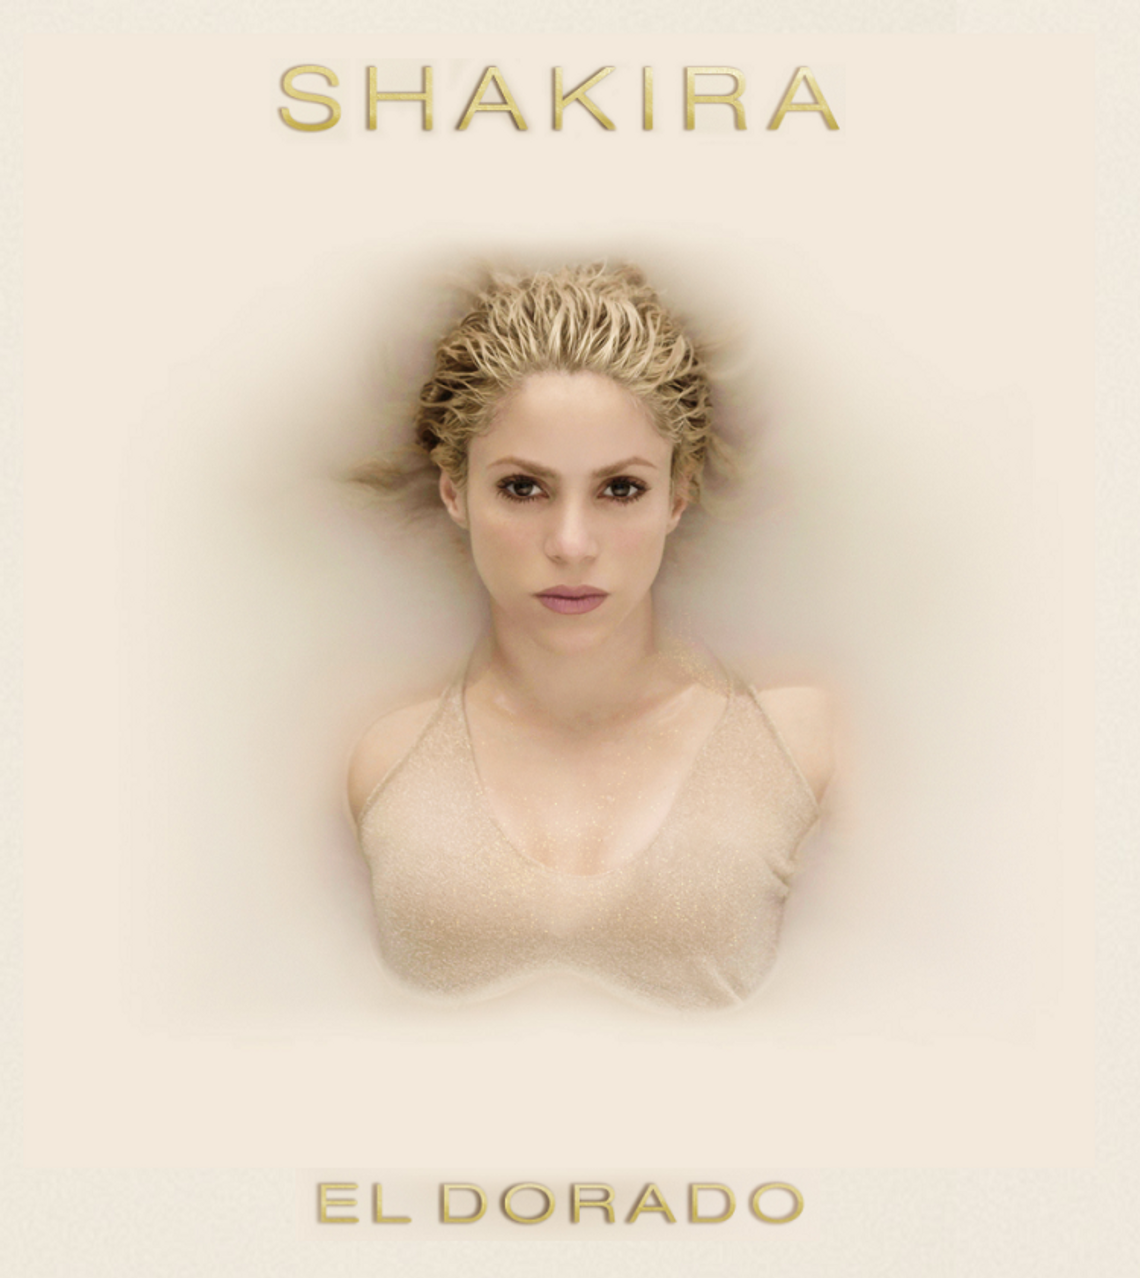 PŁYTA TYGODNIA - SHAKIRA “El Dorado”